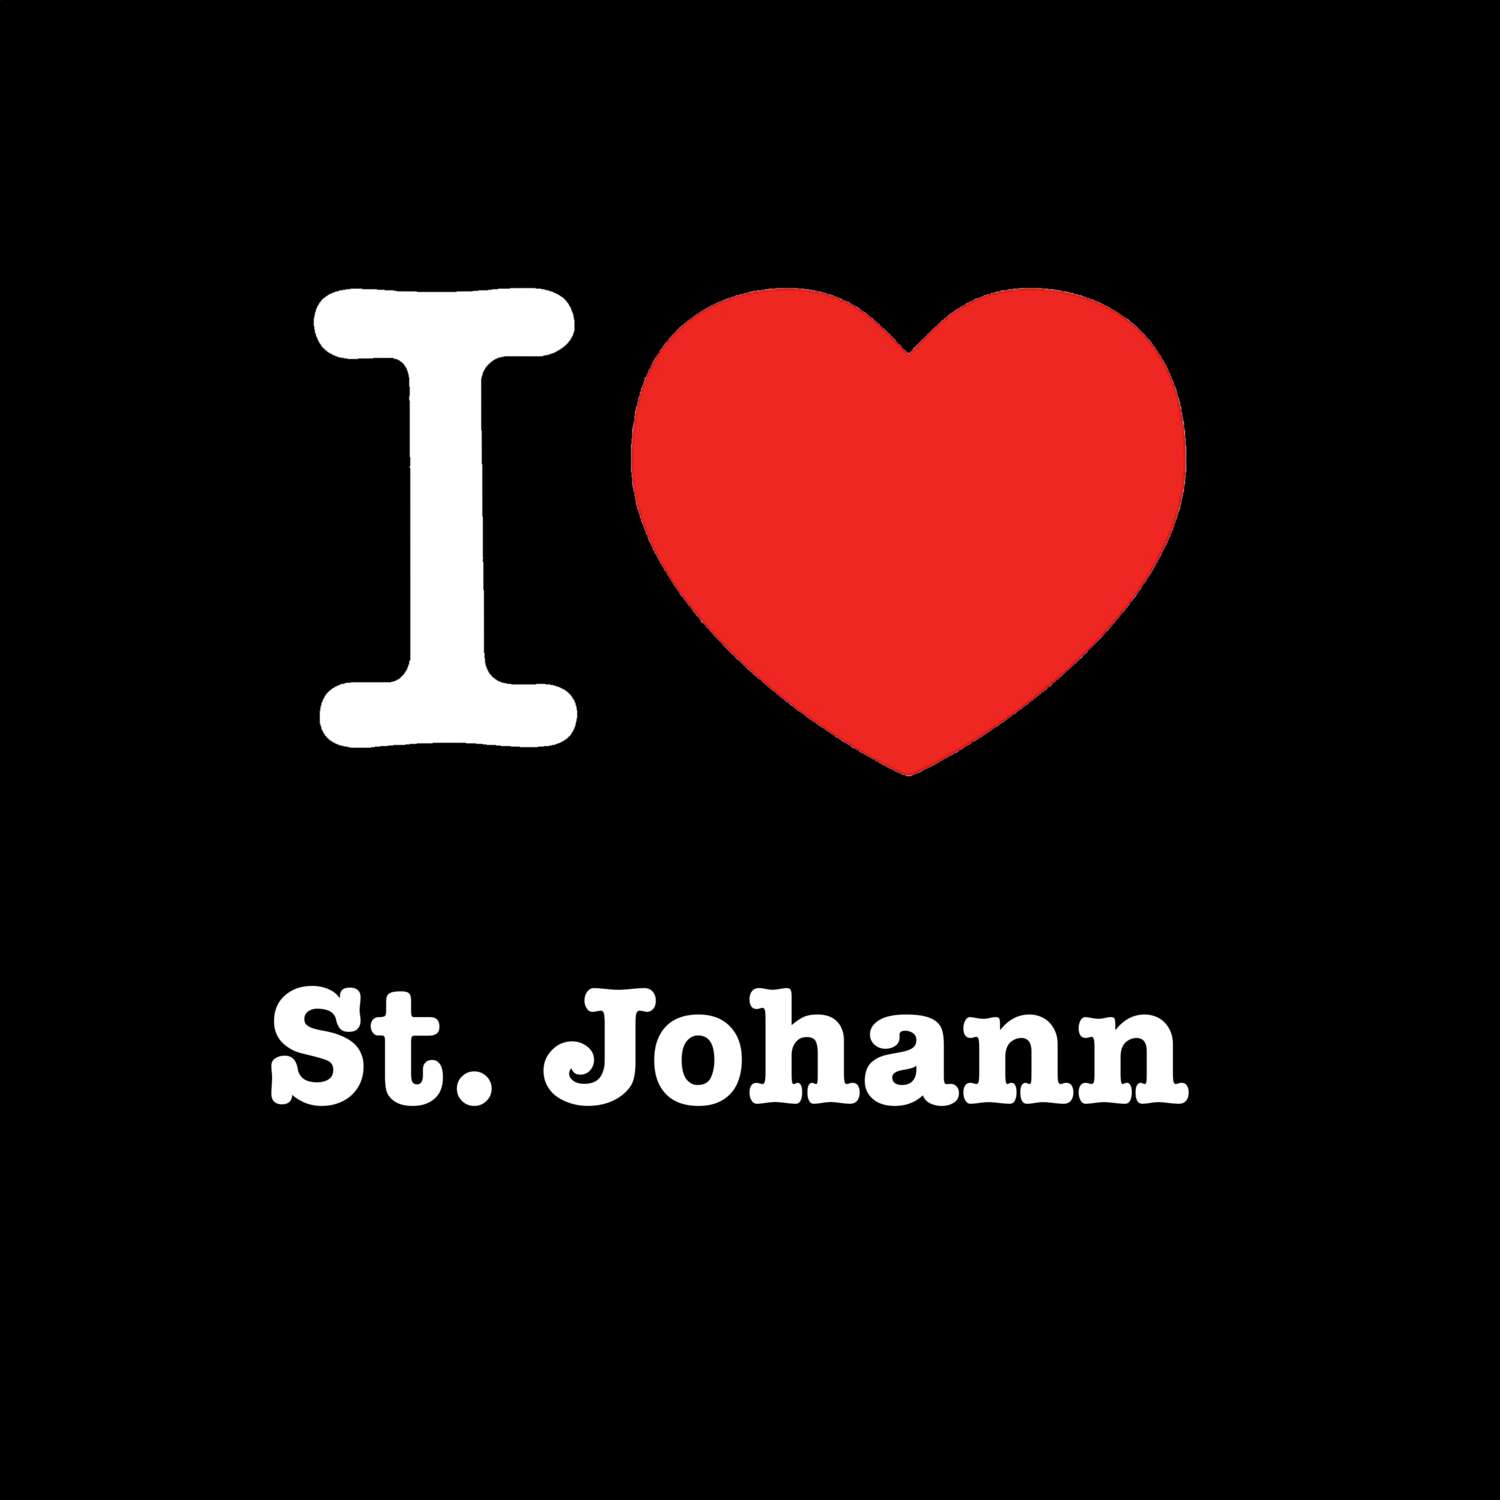 St. Johann T-Shirt »I love«